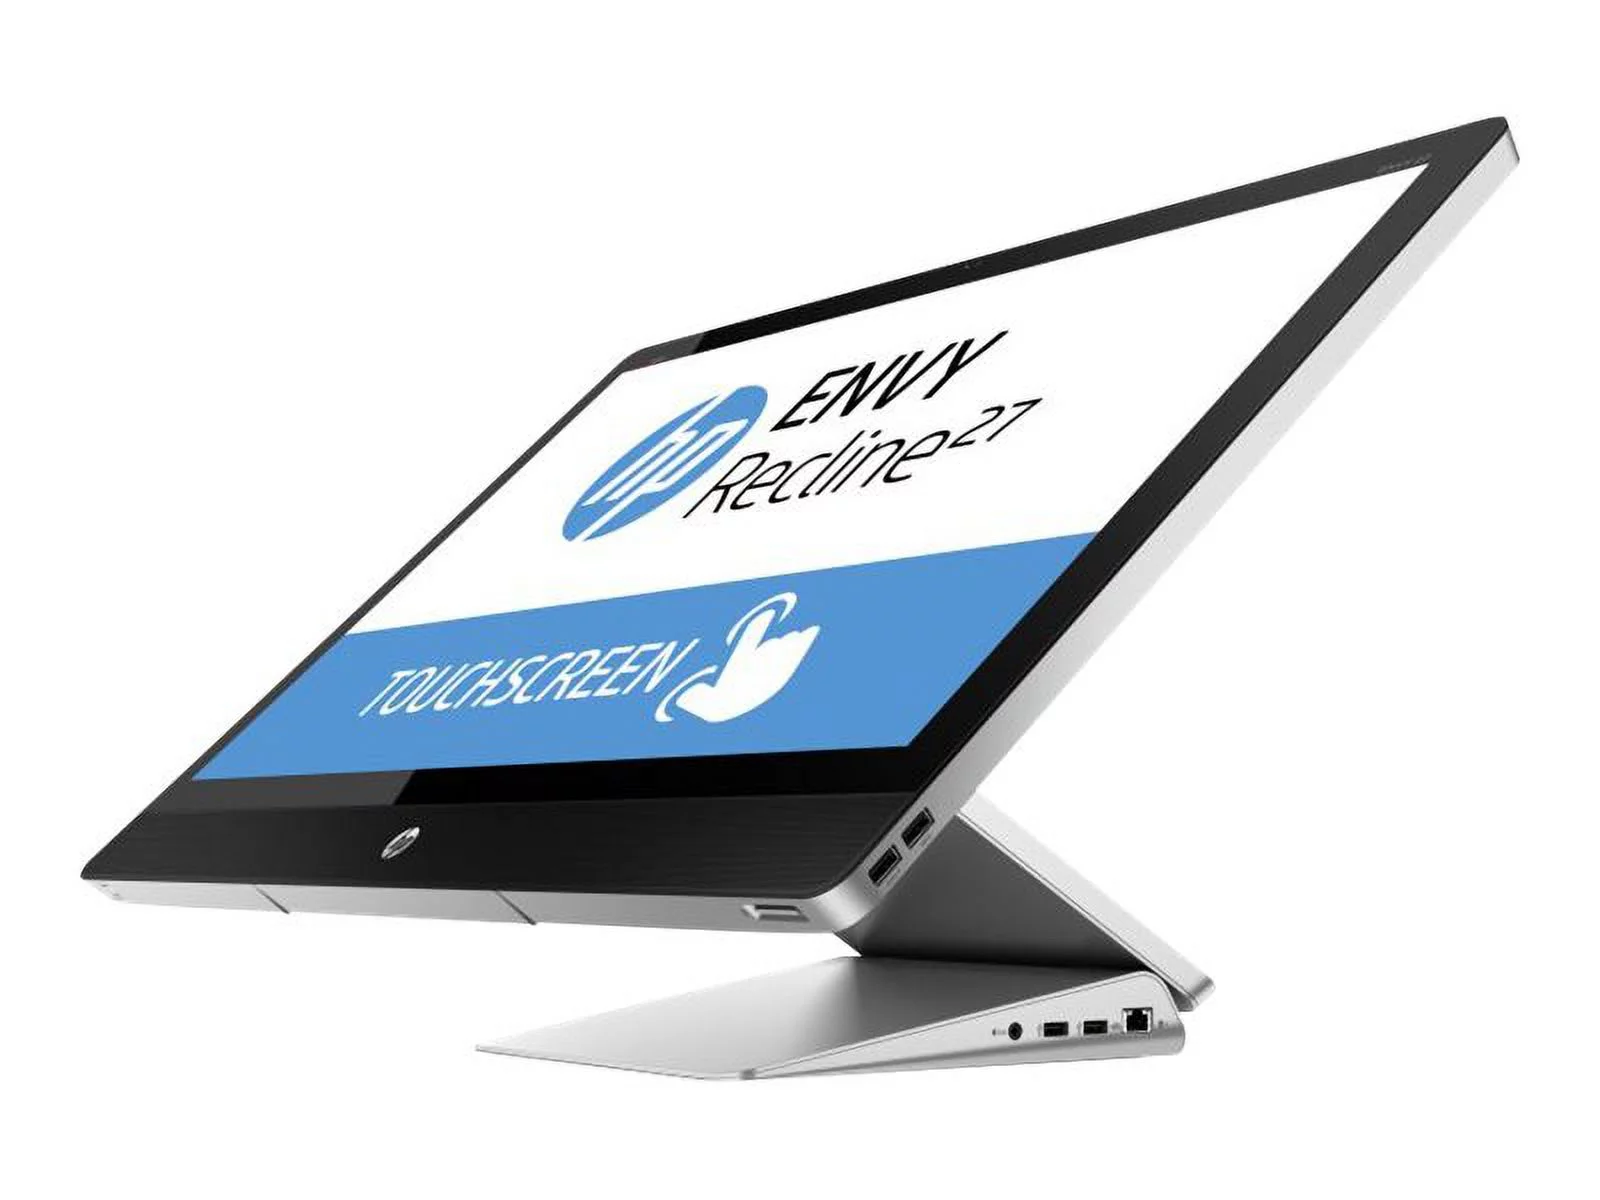 ENVY Recline 27-k100 TouchSmart All-in-One Desktop PC series